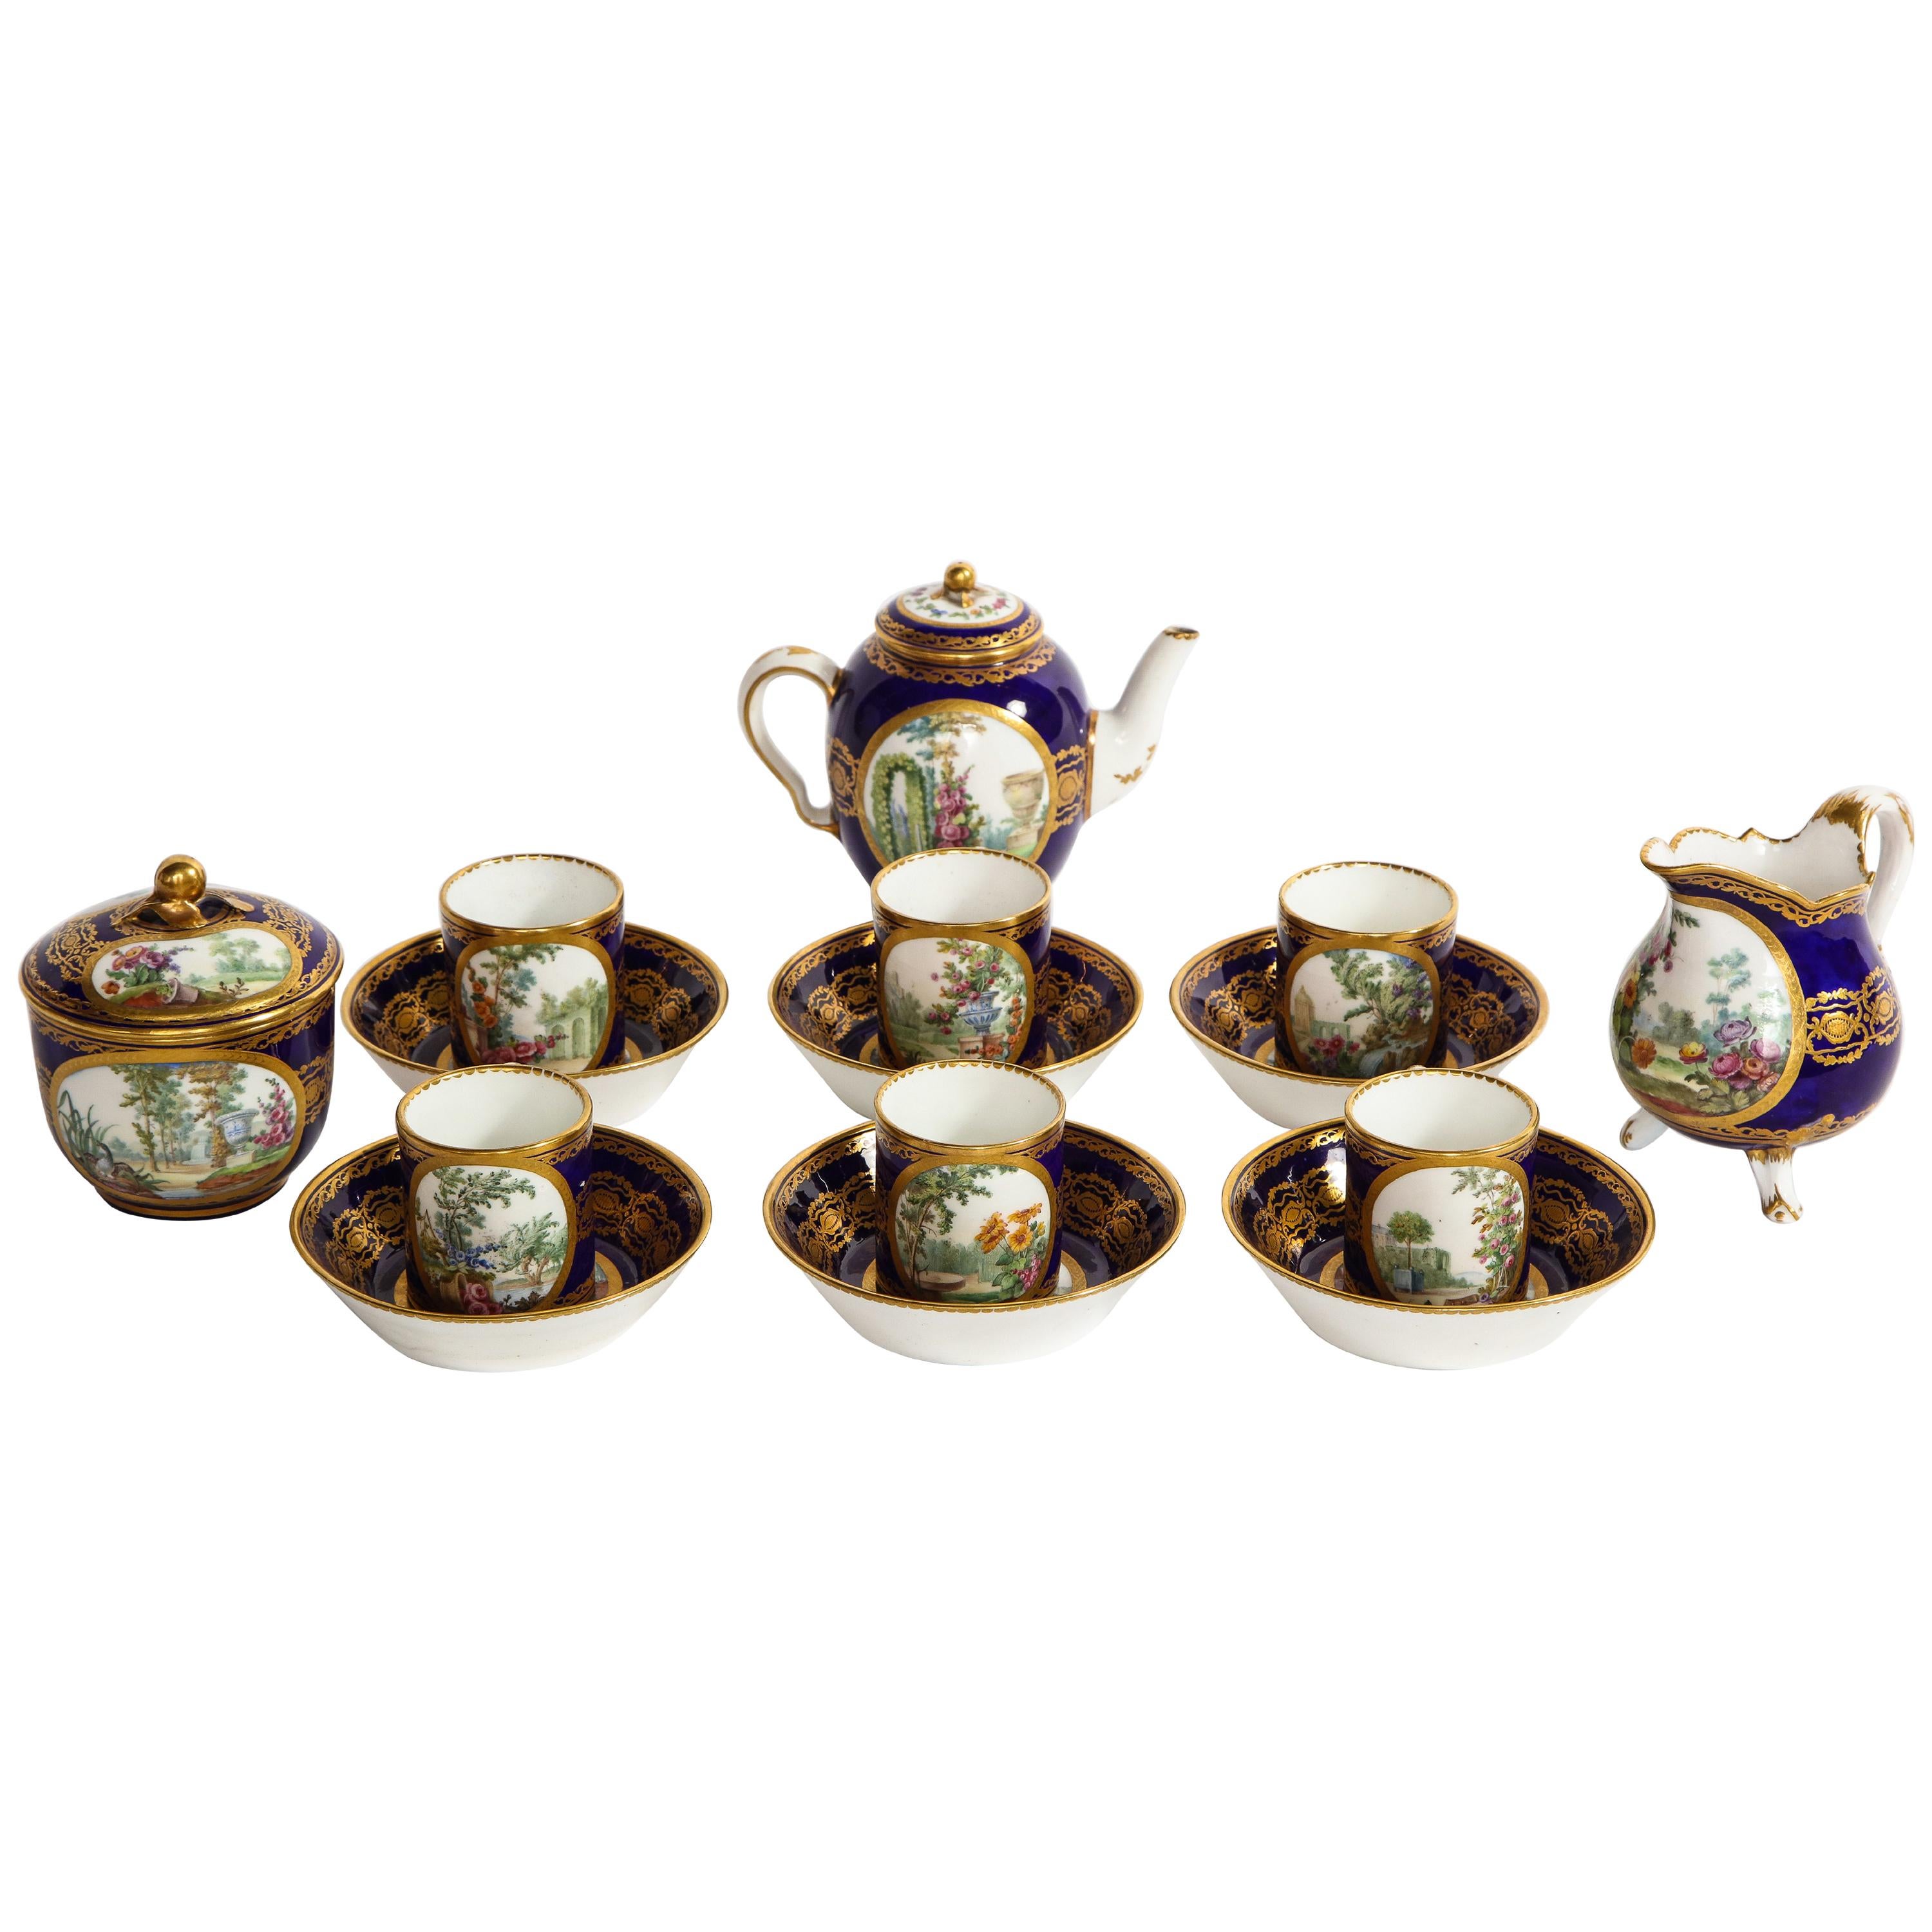 18th Century Sèvres Porcelain Complete Tea Set, with Painters and Guilders Mark